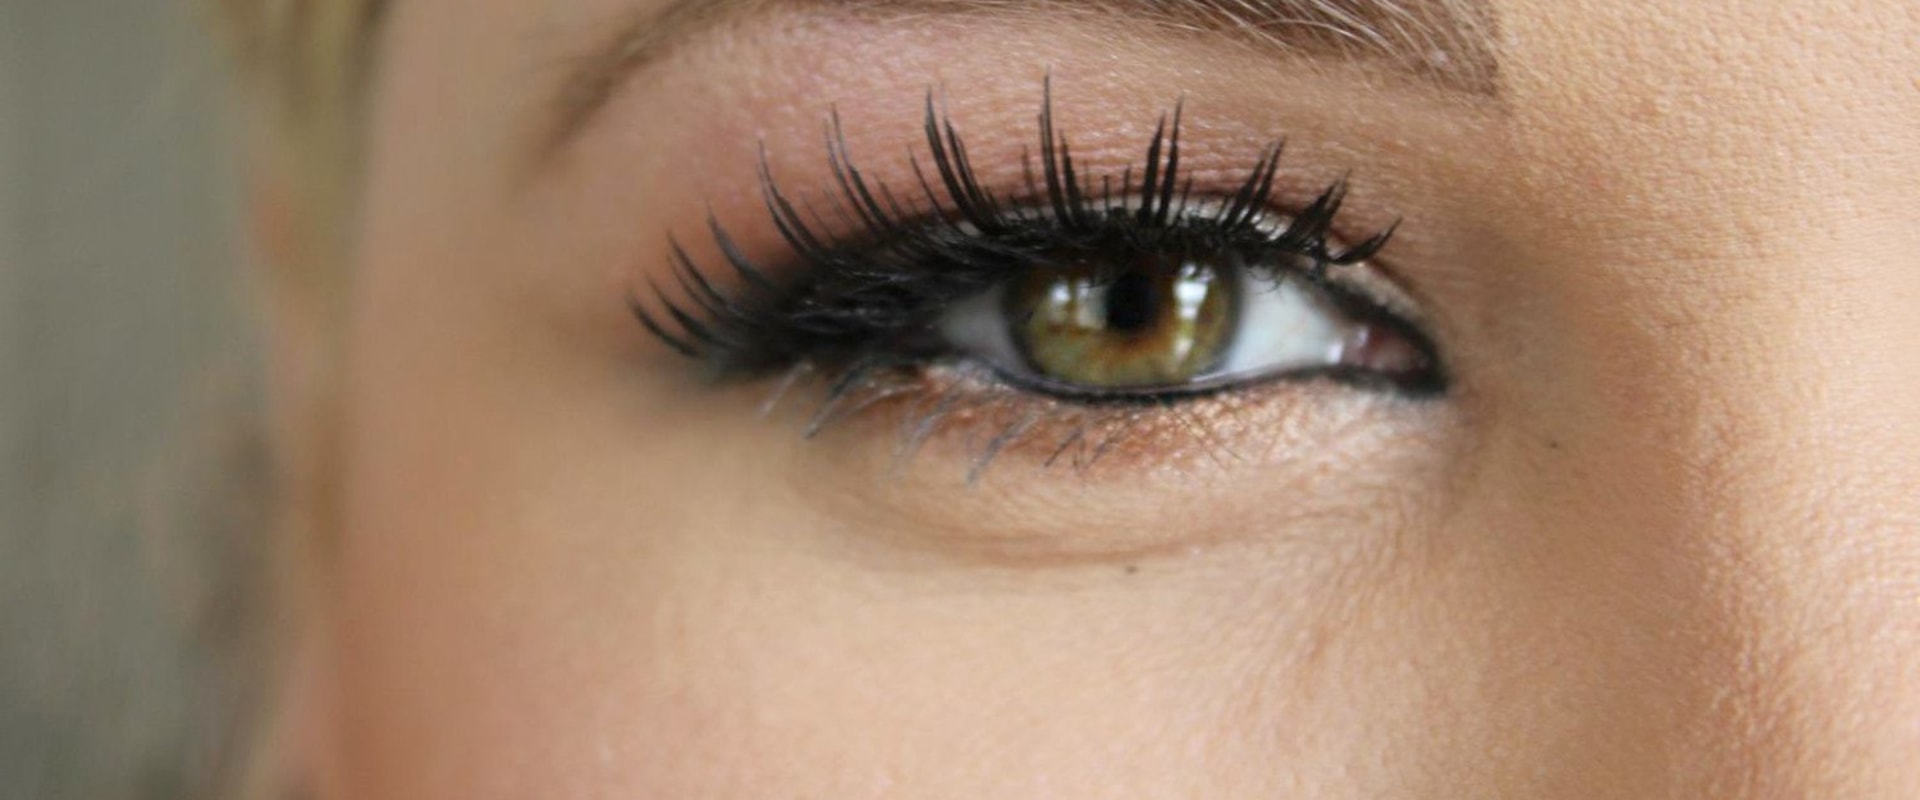 What type of eyelash extensions make your eyes look bigger?